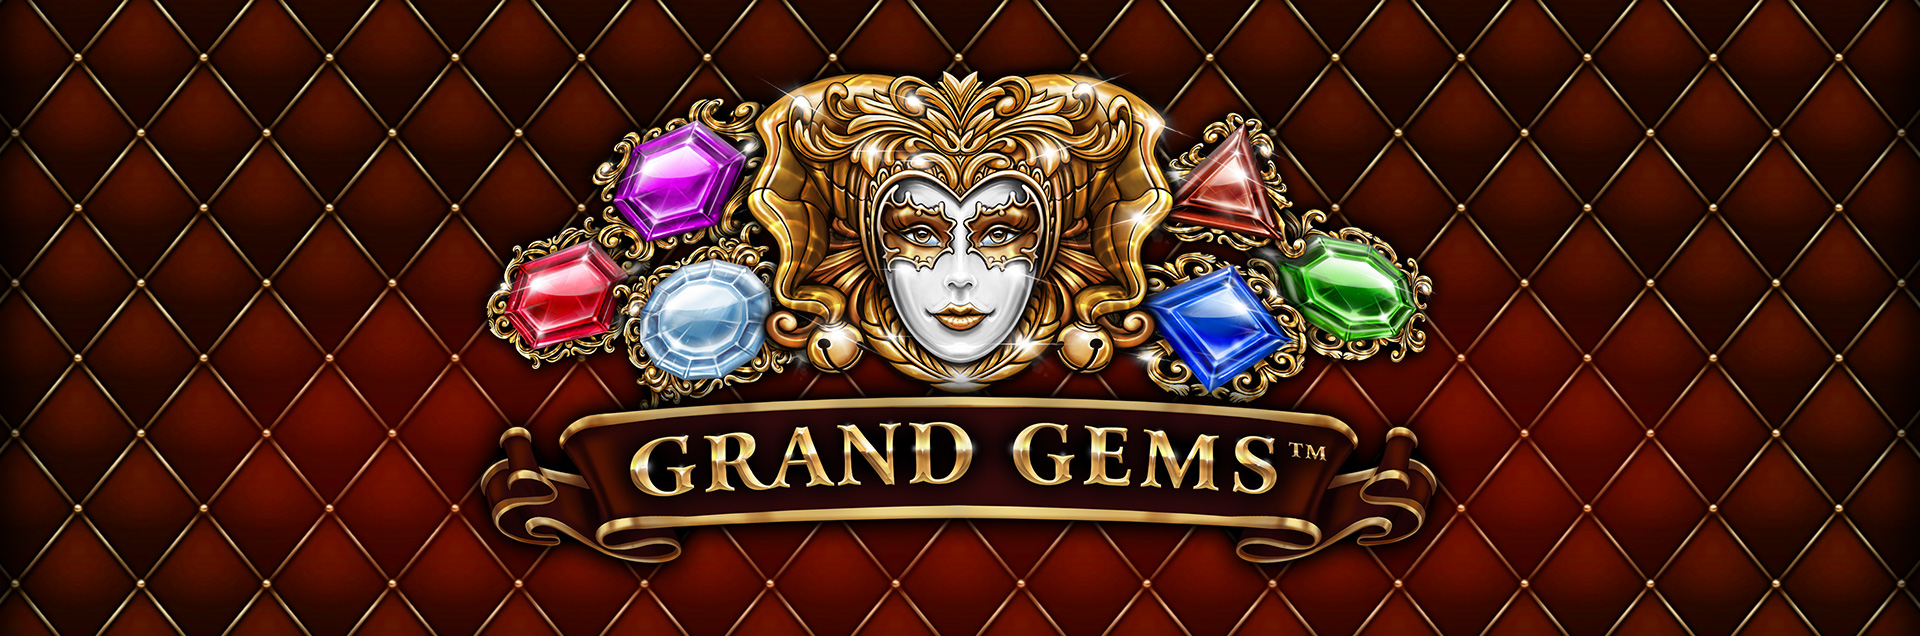 Grand Gems games header2